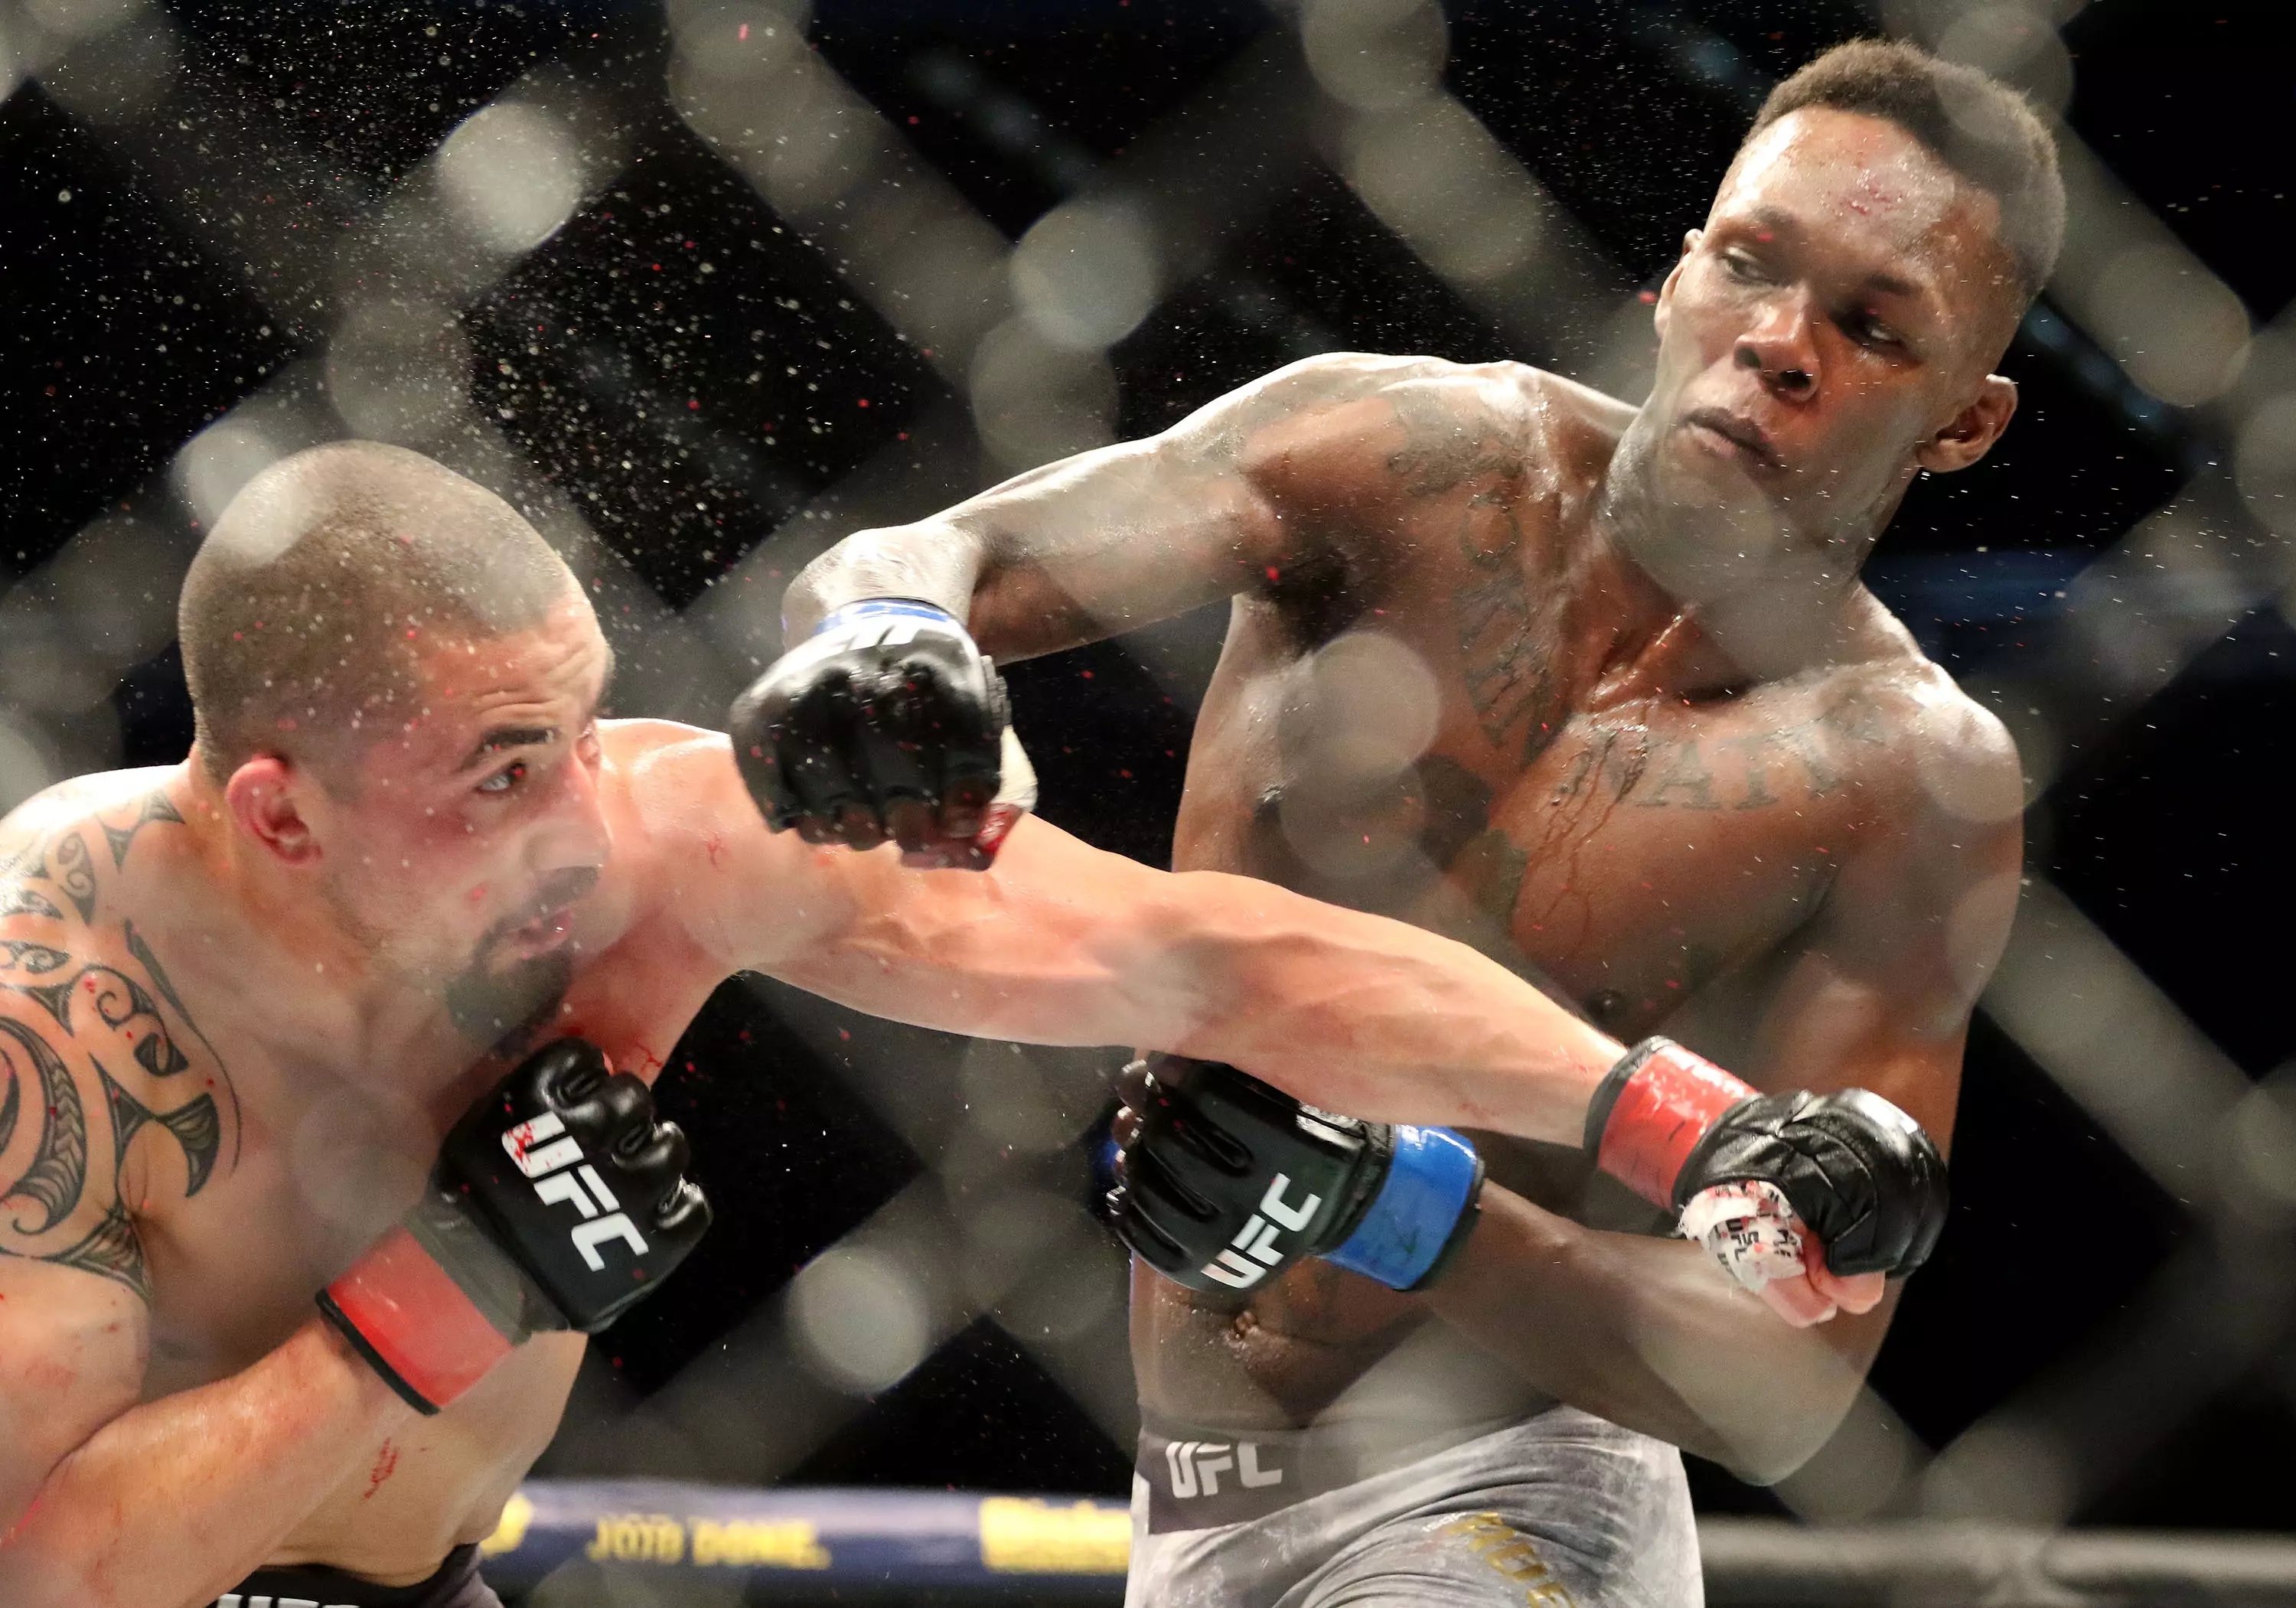 PA: Israel Adesanya beat Robert Whittaker at UFC 243